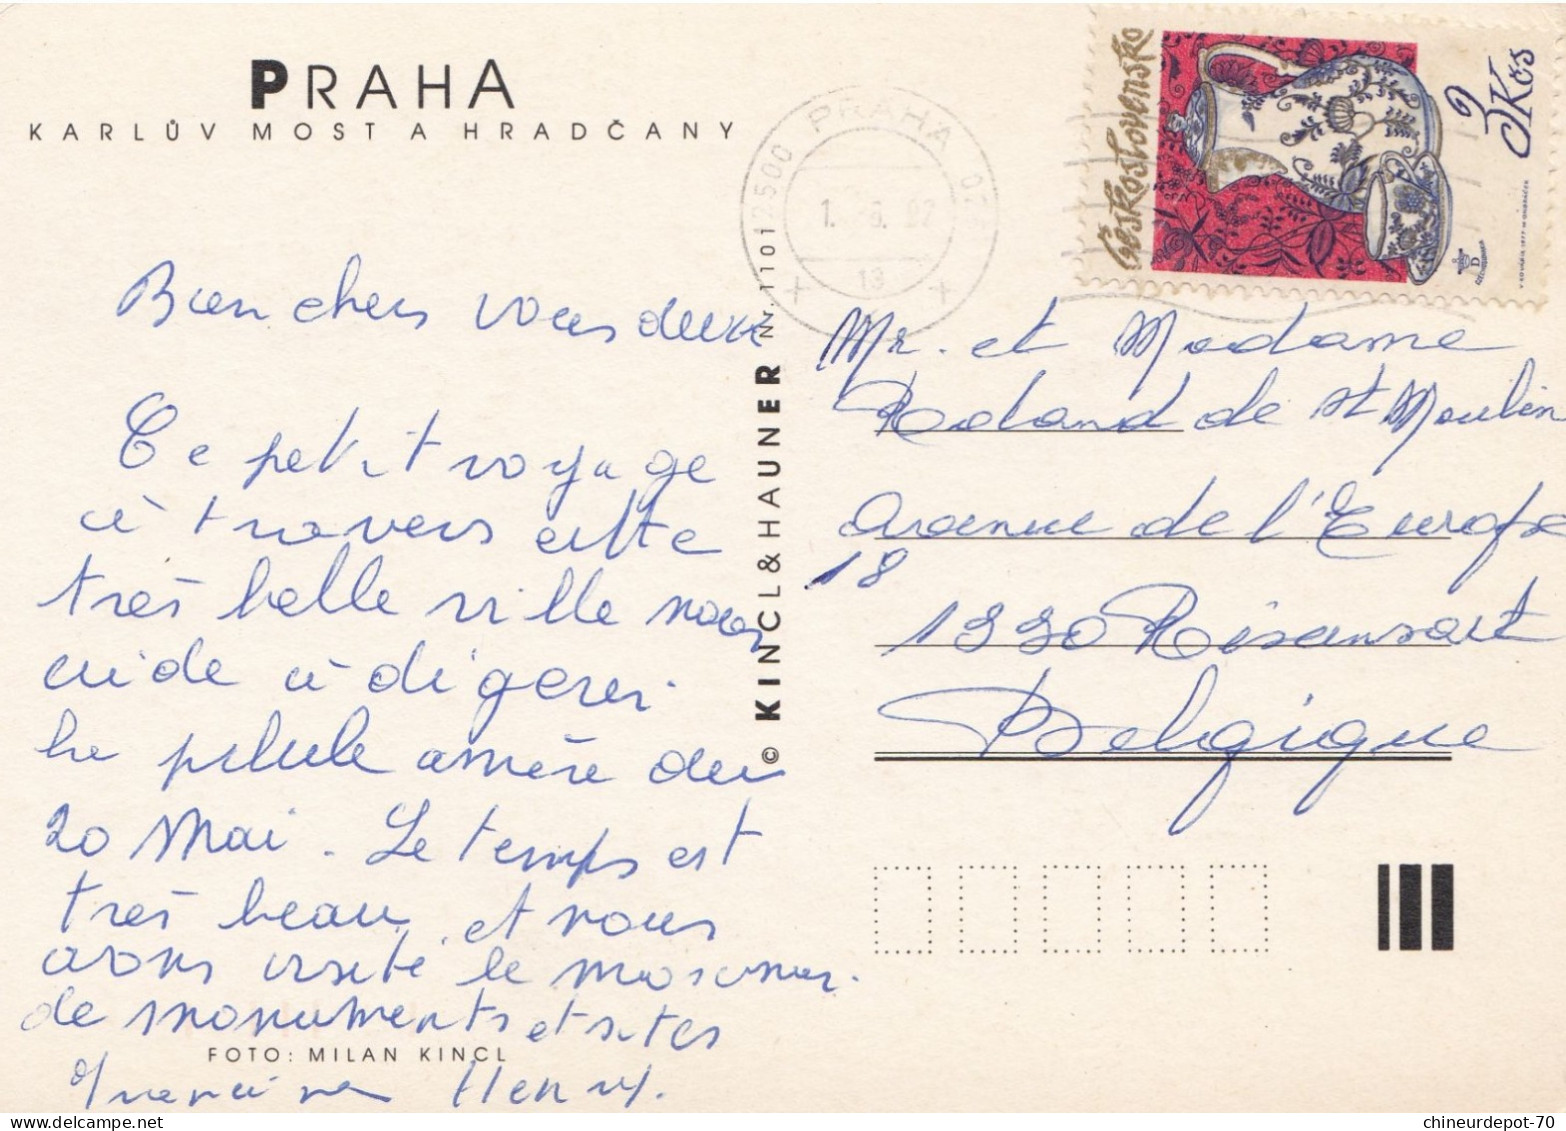 Tchécoslovaquie PRAGUE PONT CHARLES PHOTO MILAN KINCL PRAHA KARLŮV MOST A HRADČANY - Tchéquie